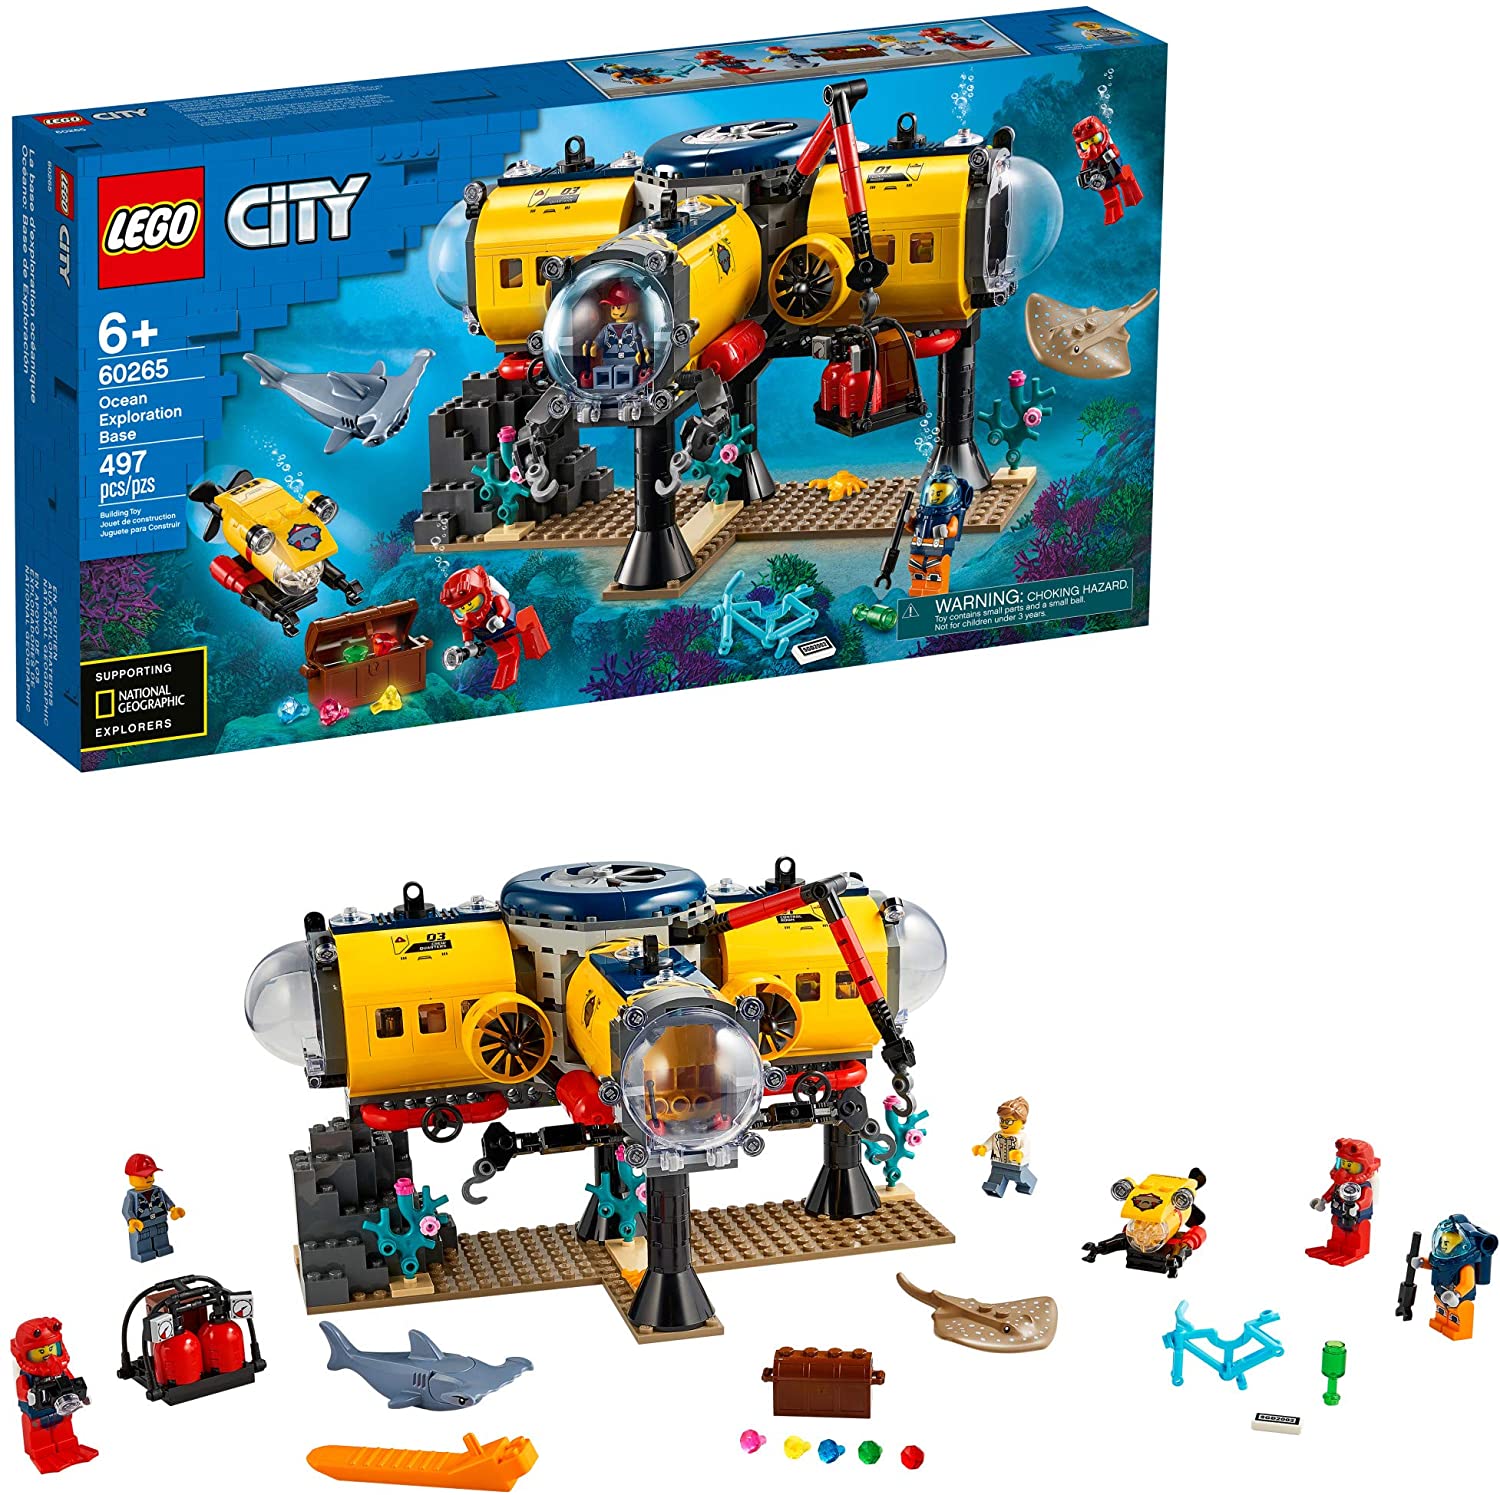 LEGO Ocean Exploration Base 60265